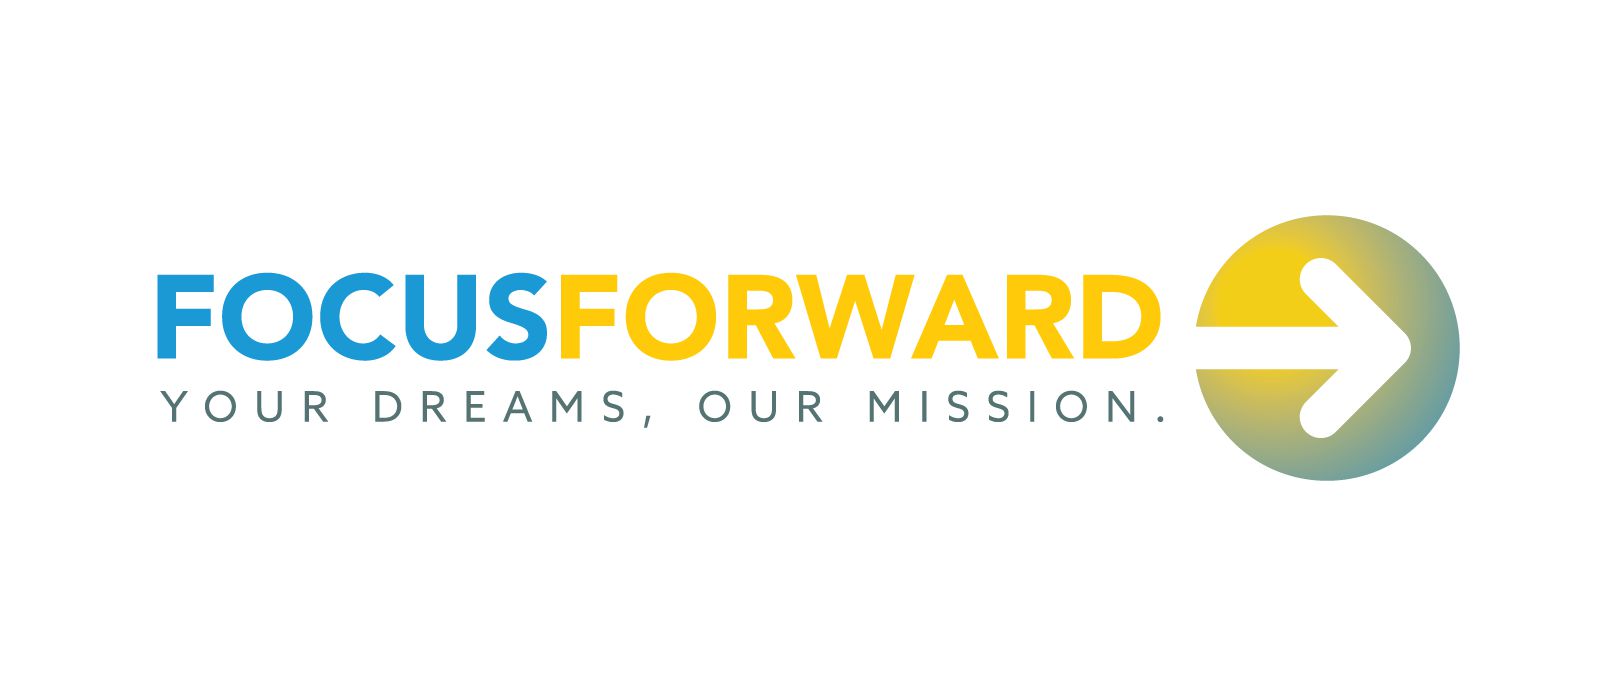 This is Focus Forward logo.